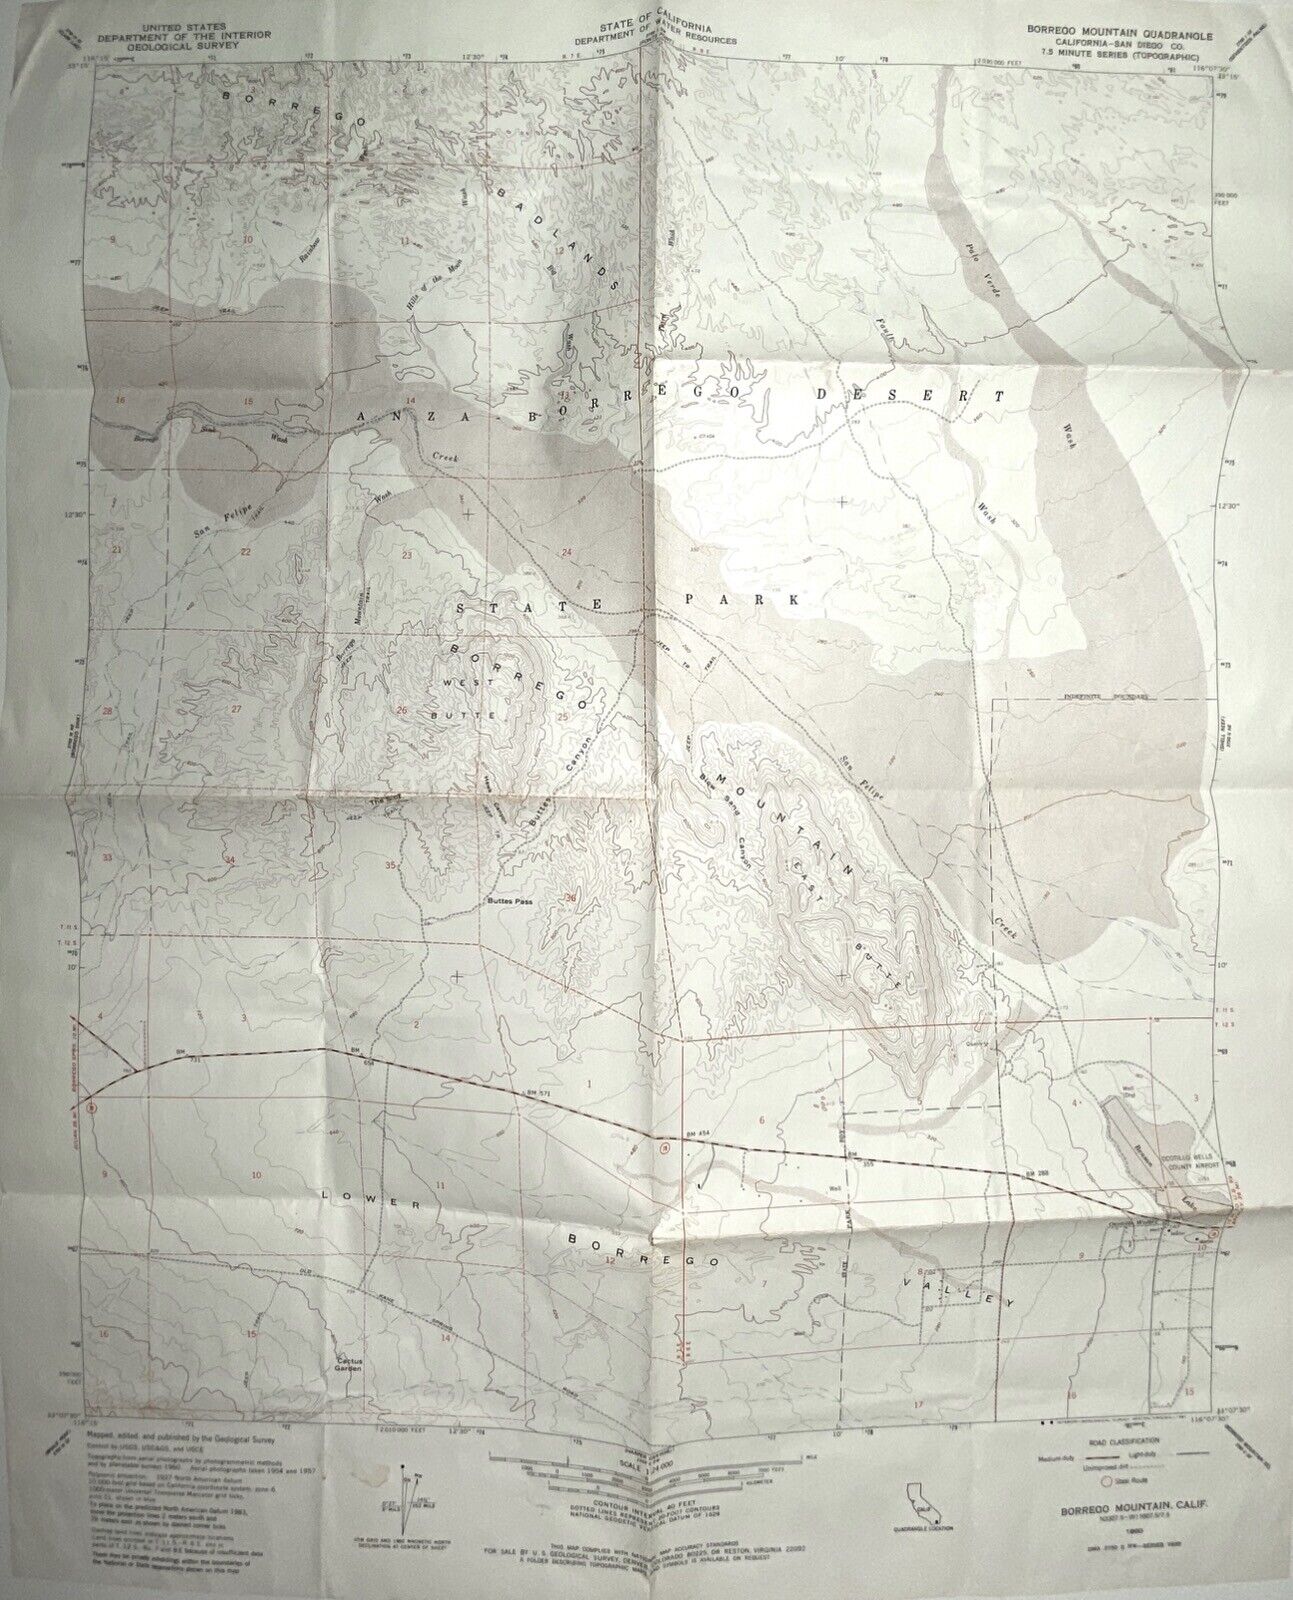 Borrego Quadrangle - San Diego California • 1960 Geological Topographic Map